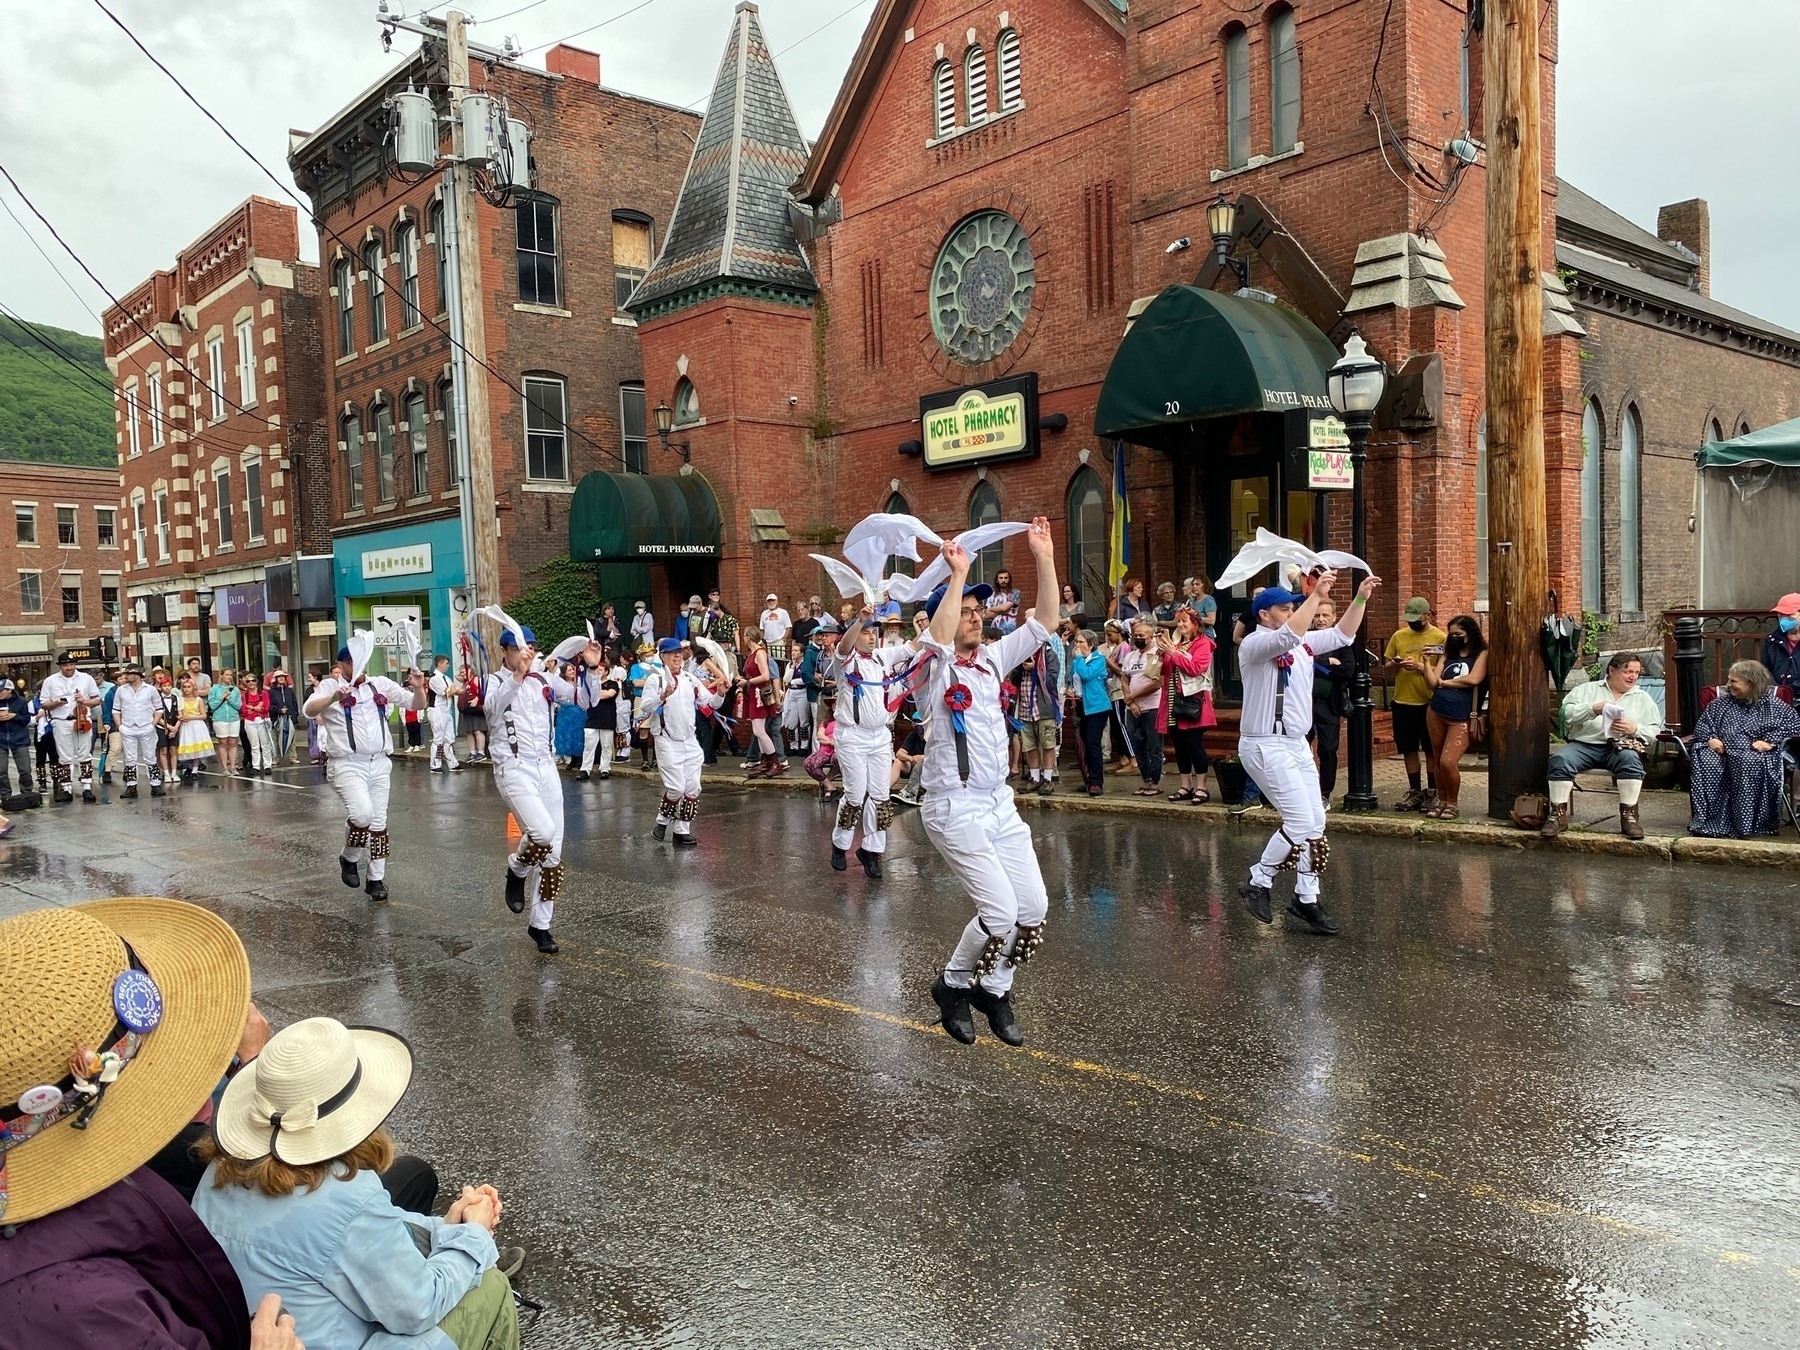 Morris dancers waving handkerchiefs while dancing on a wet street in front of brick buildings.